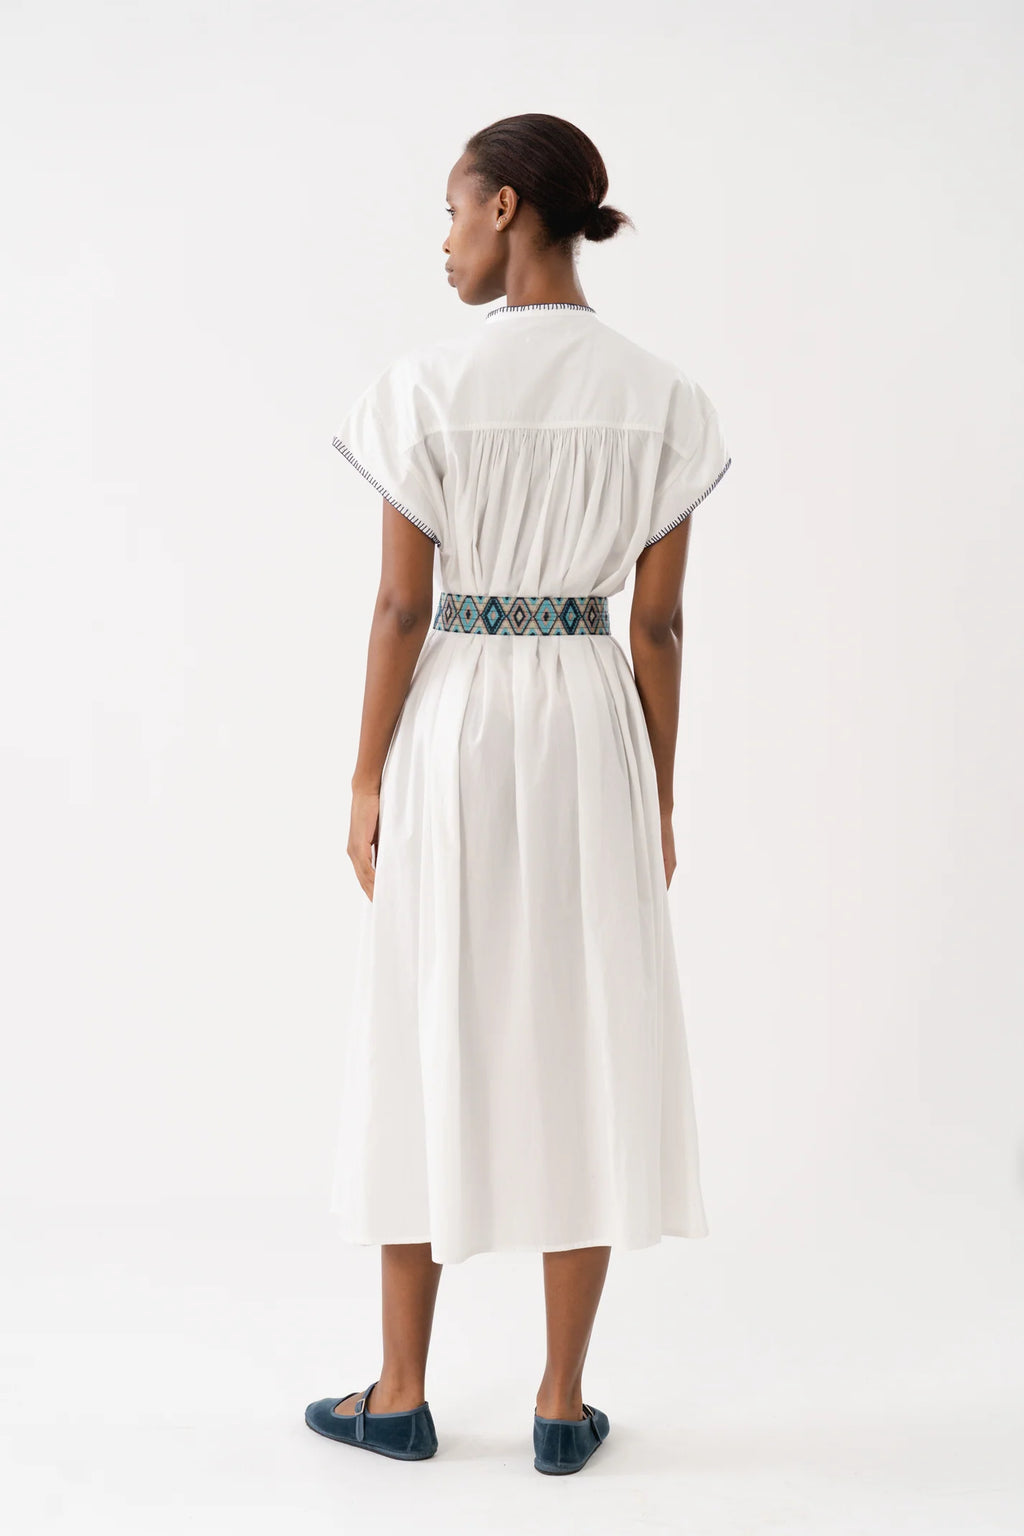 Lolly's Laundry Pinja White Maxi Dress - The Mercantile London